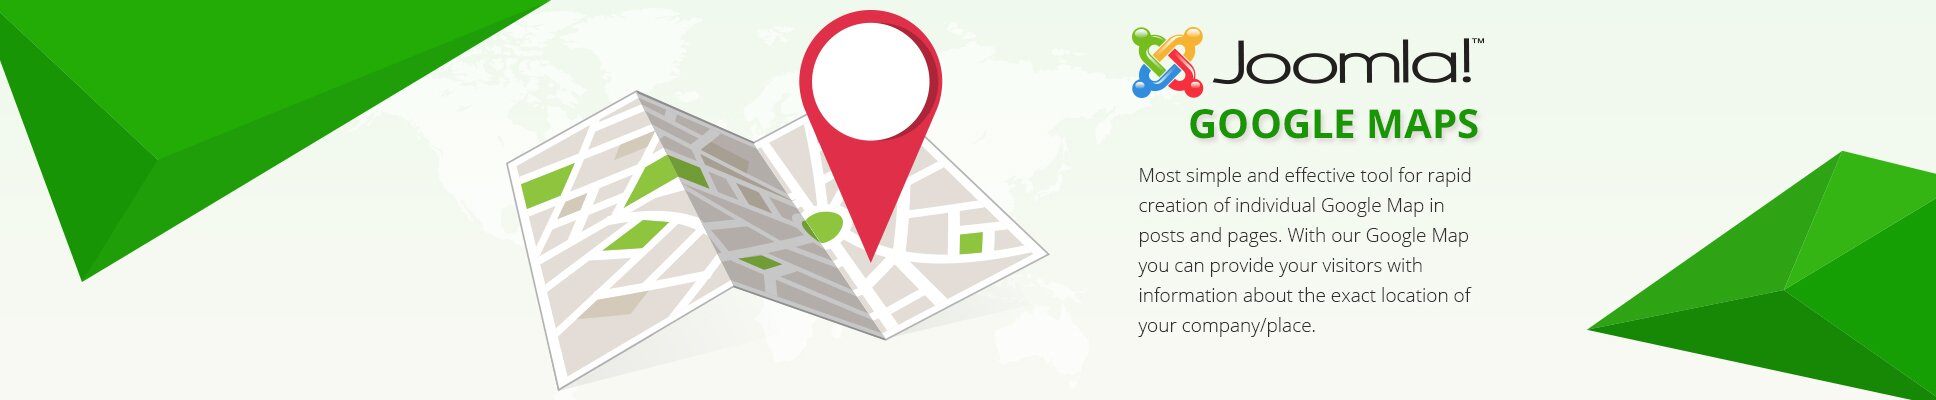 Joomla Google Maps User Manual